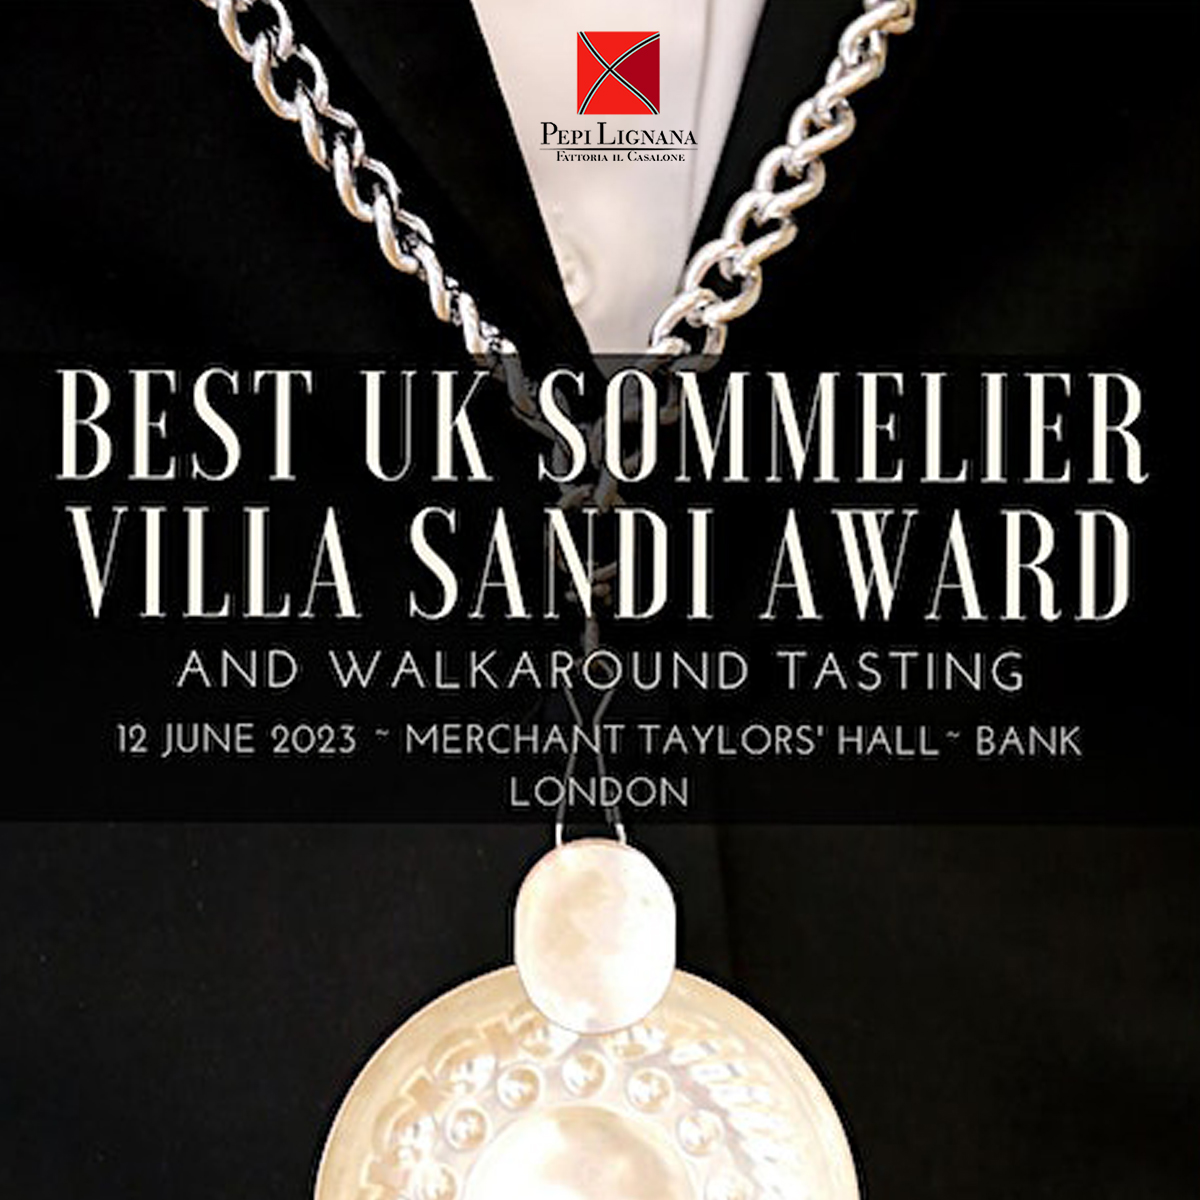 Villa Sandy Award London Pepi Lignana Wine 13